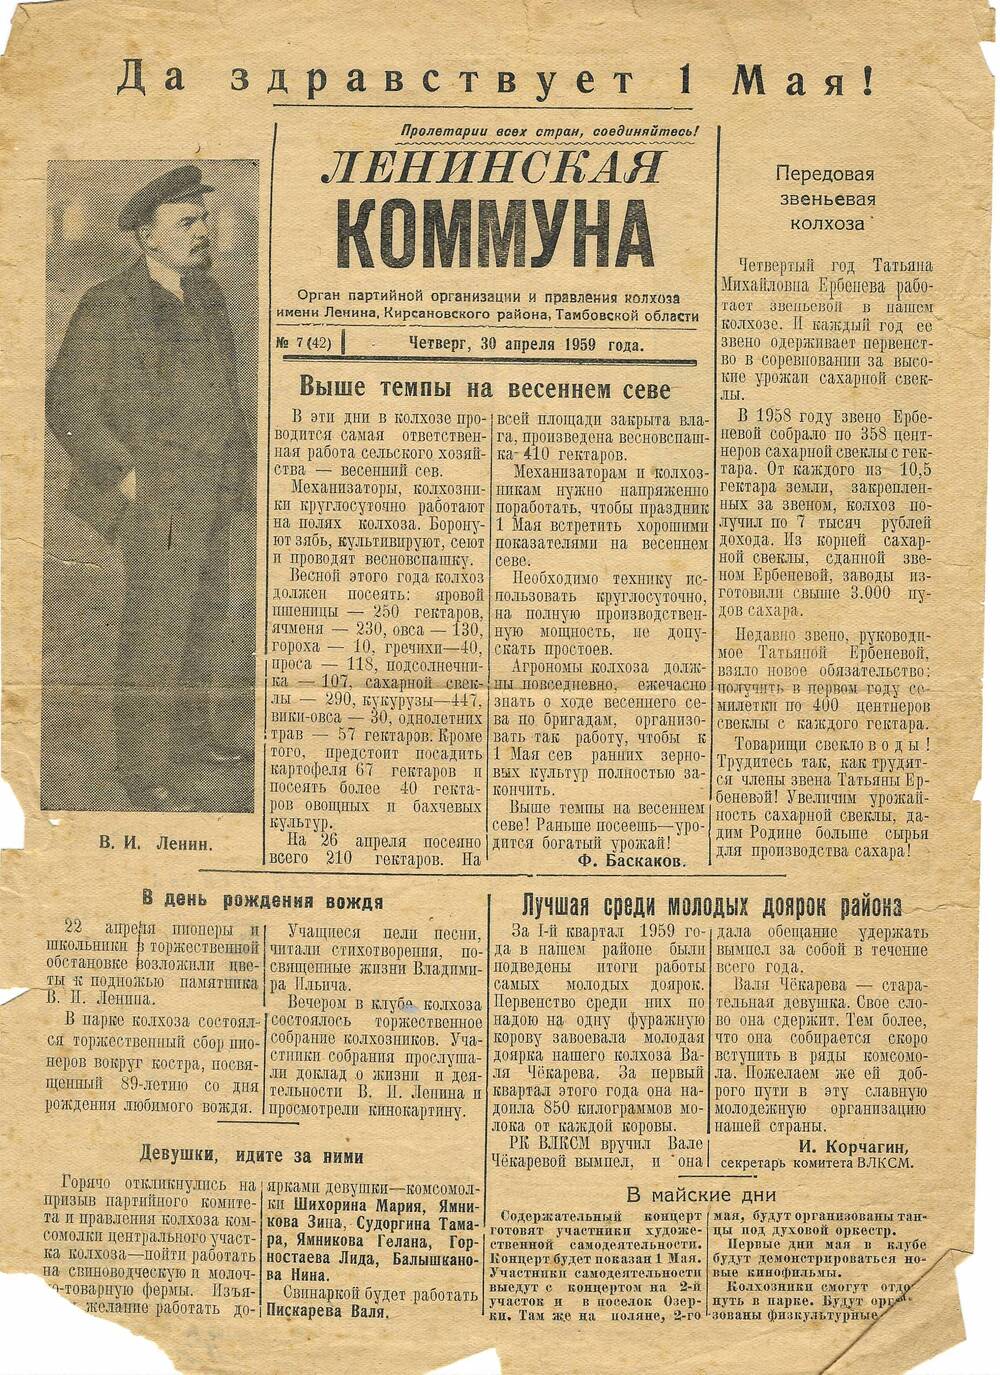 Газета.  Ленинская коммуна ( к-за им. Ленина) № 7 (42) от  30 апреля 1959 г.